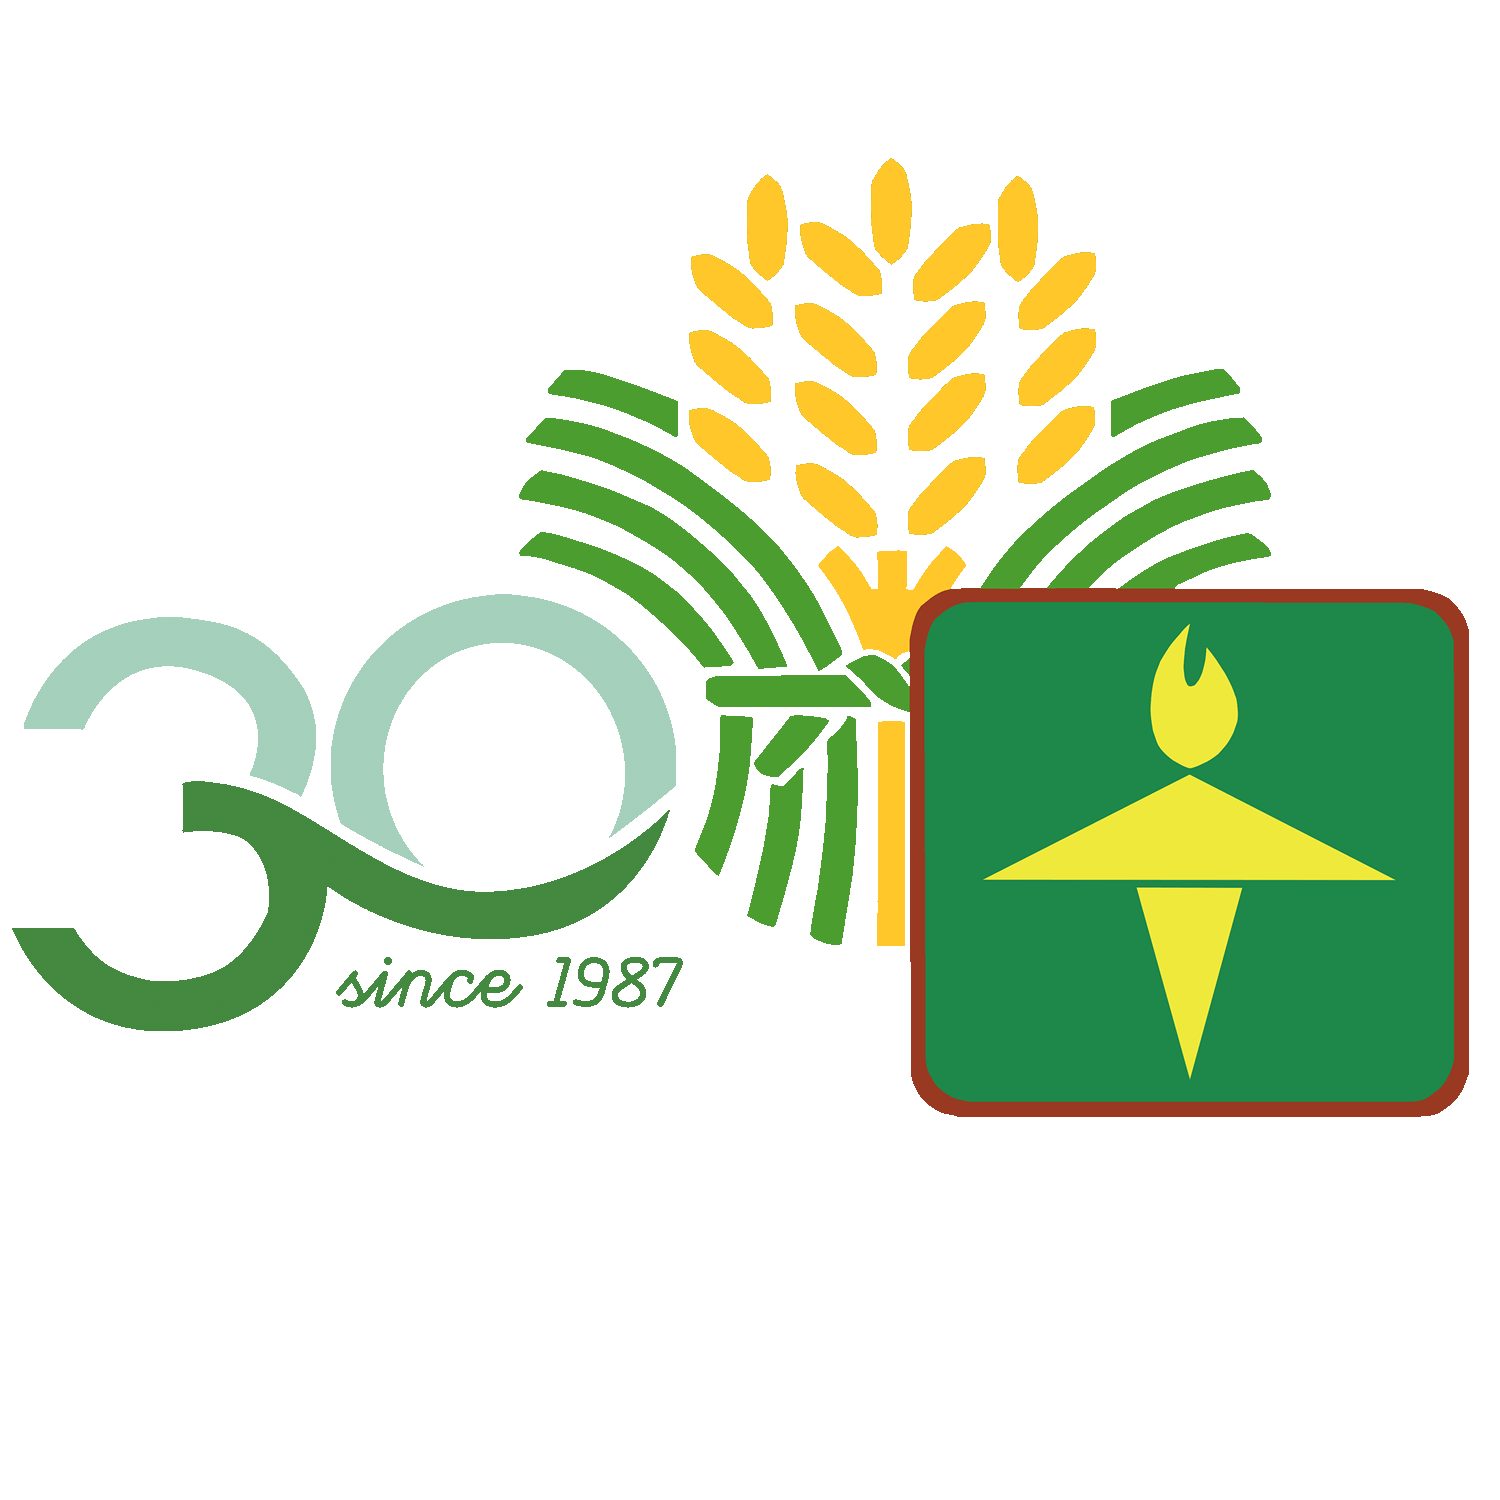 ATI at 30 logo